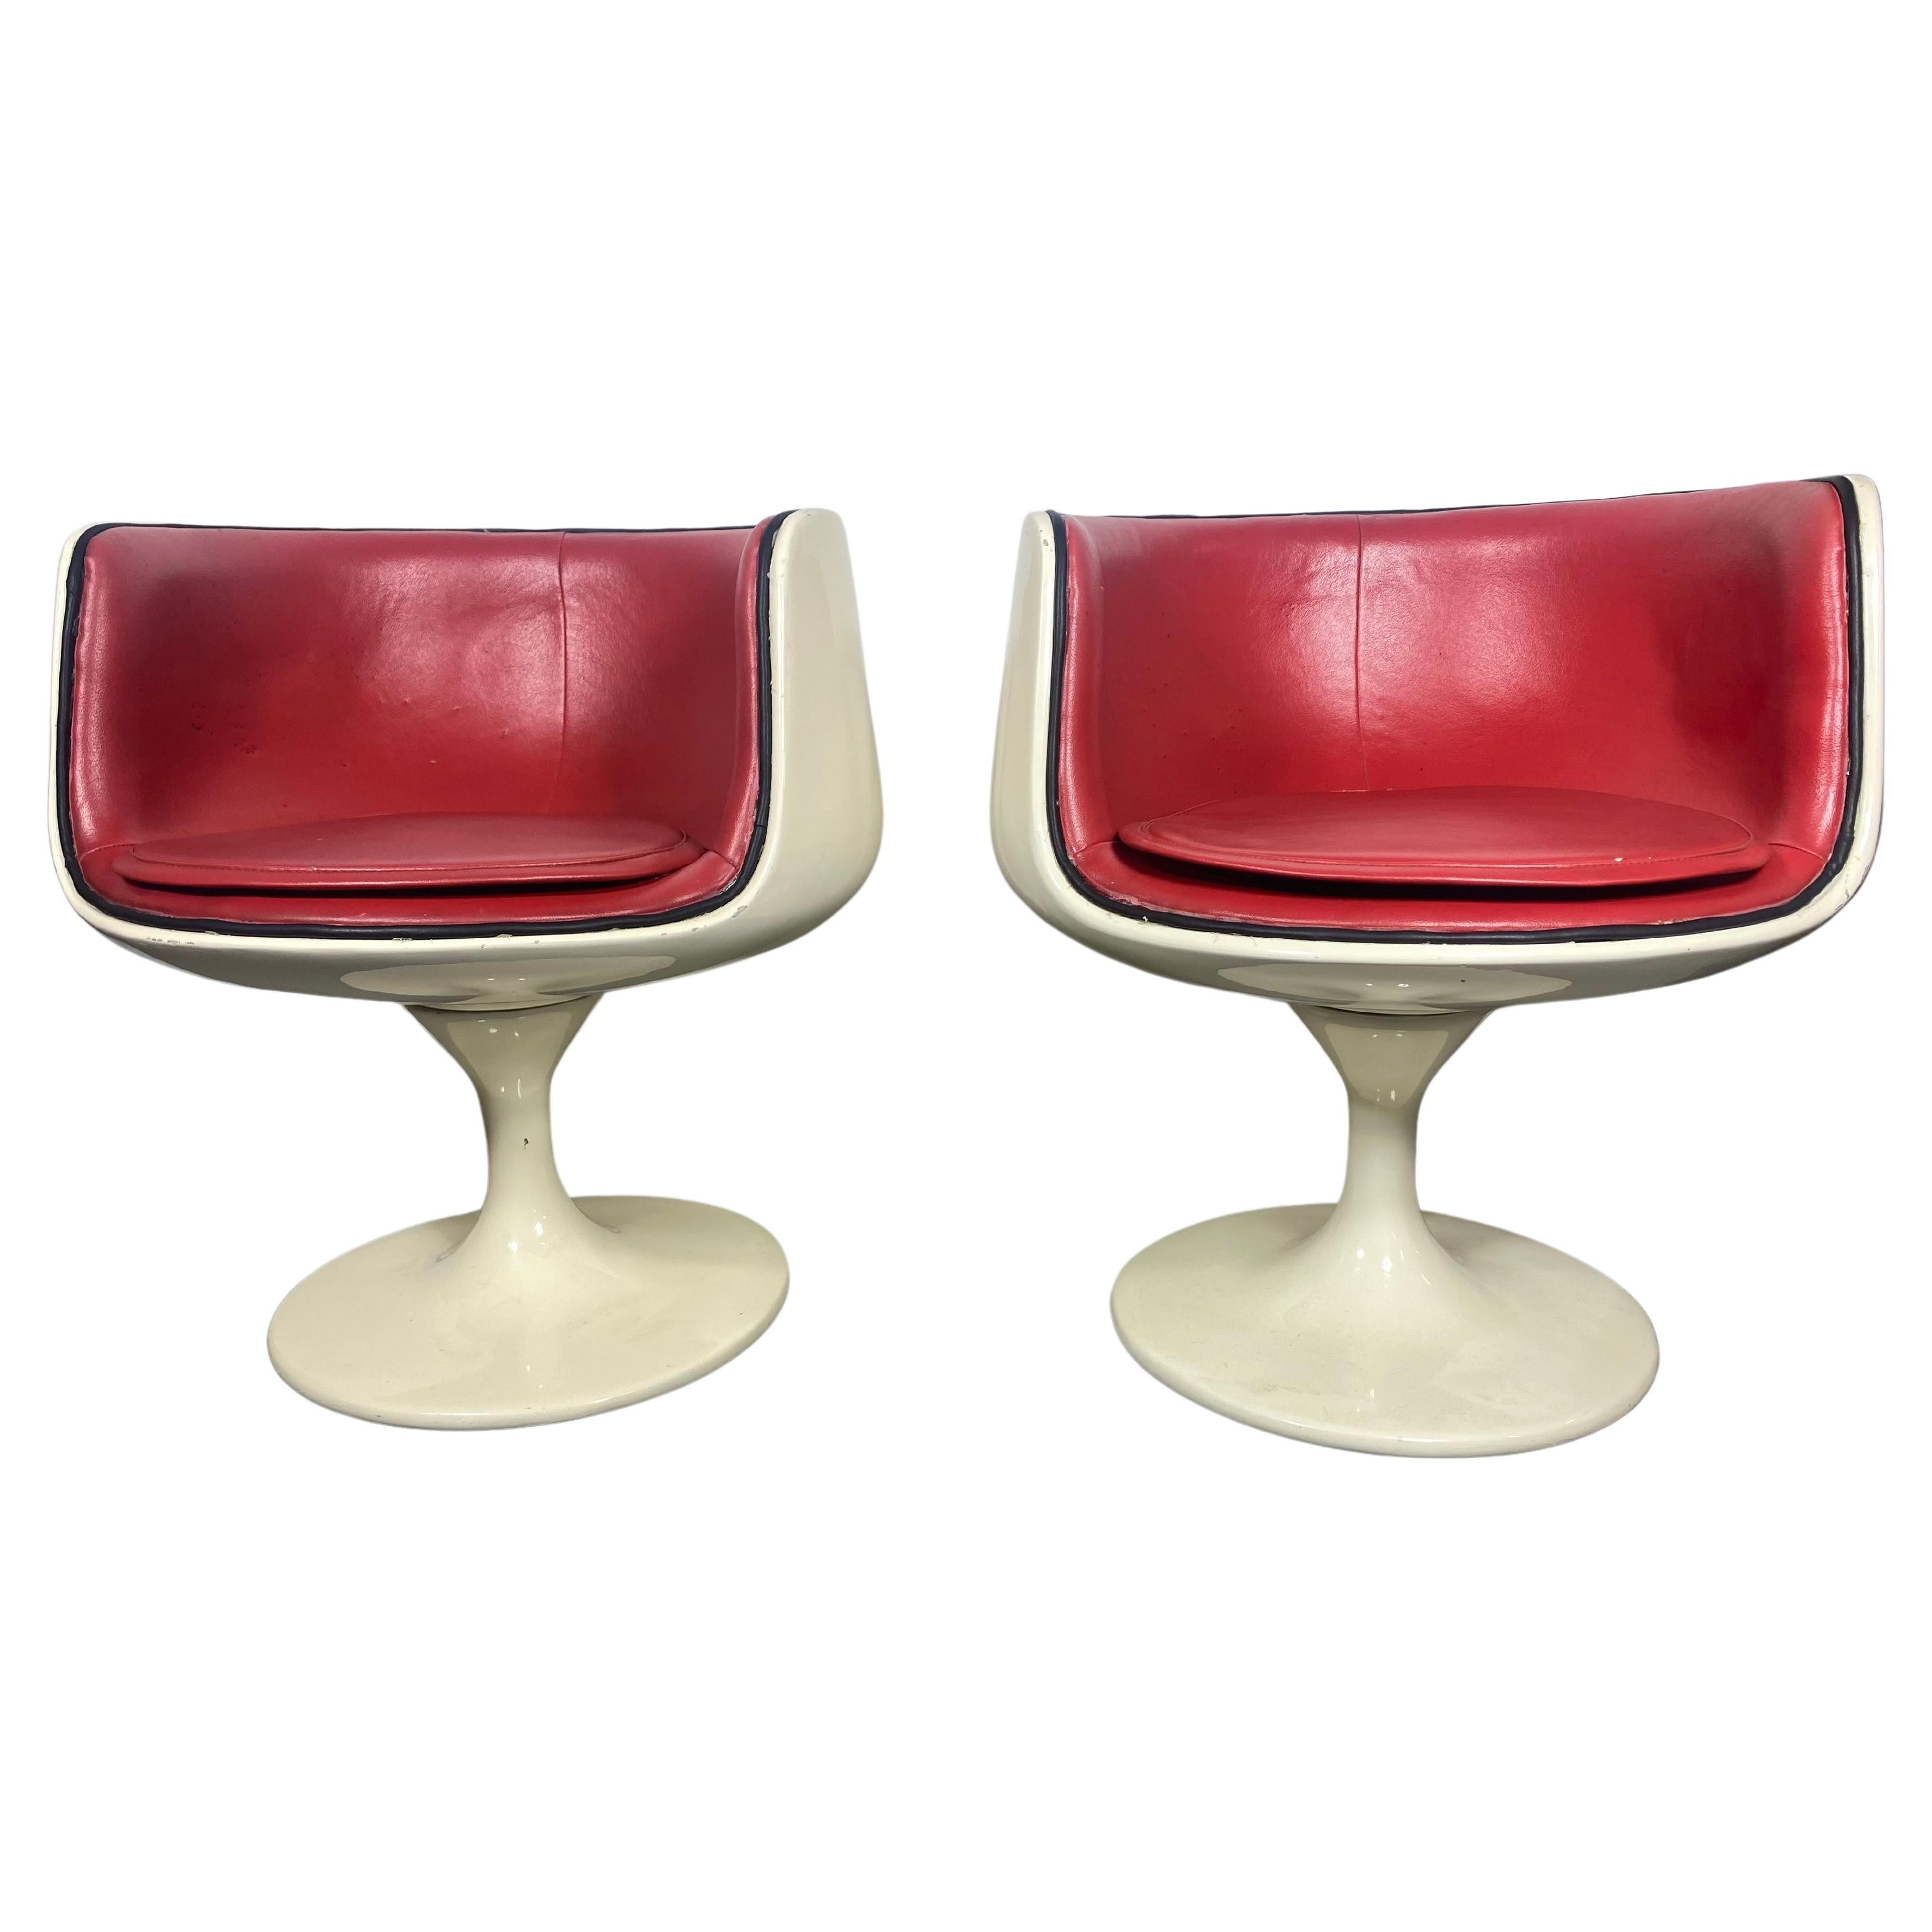 https://a.1stdibscdn.com/eero-aarnio-asko-cognac-vsop-chairs-classic-pop-modernist-for-sale/f_10624/f_364111621696175119682/f_36411162_1696175121022_bg_processed.jpg